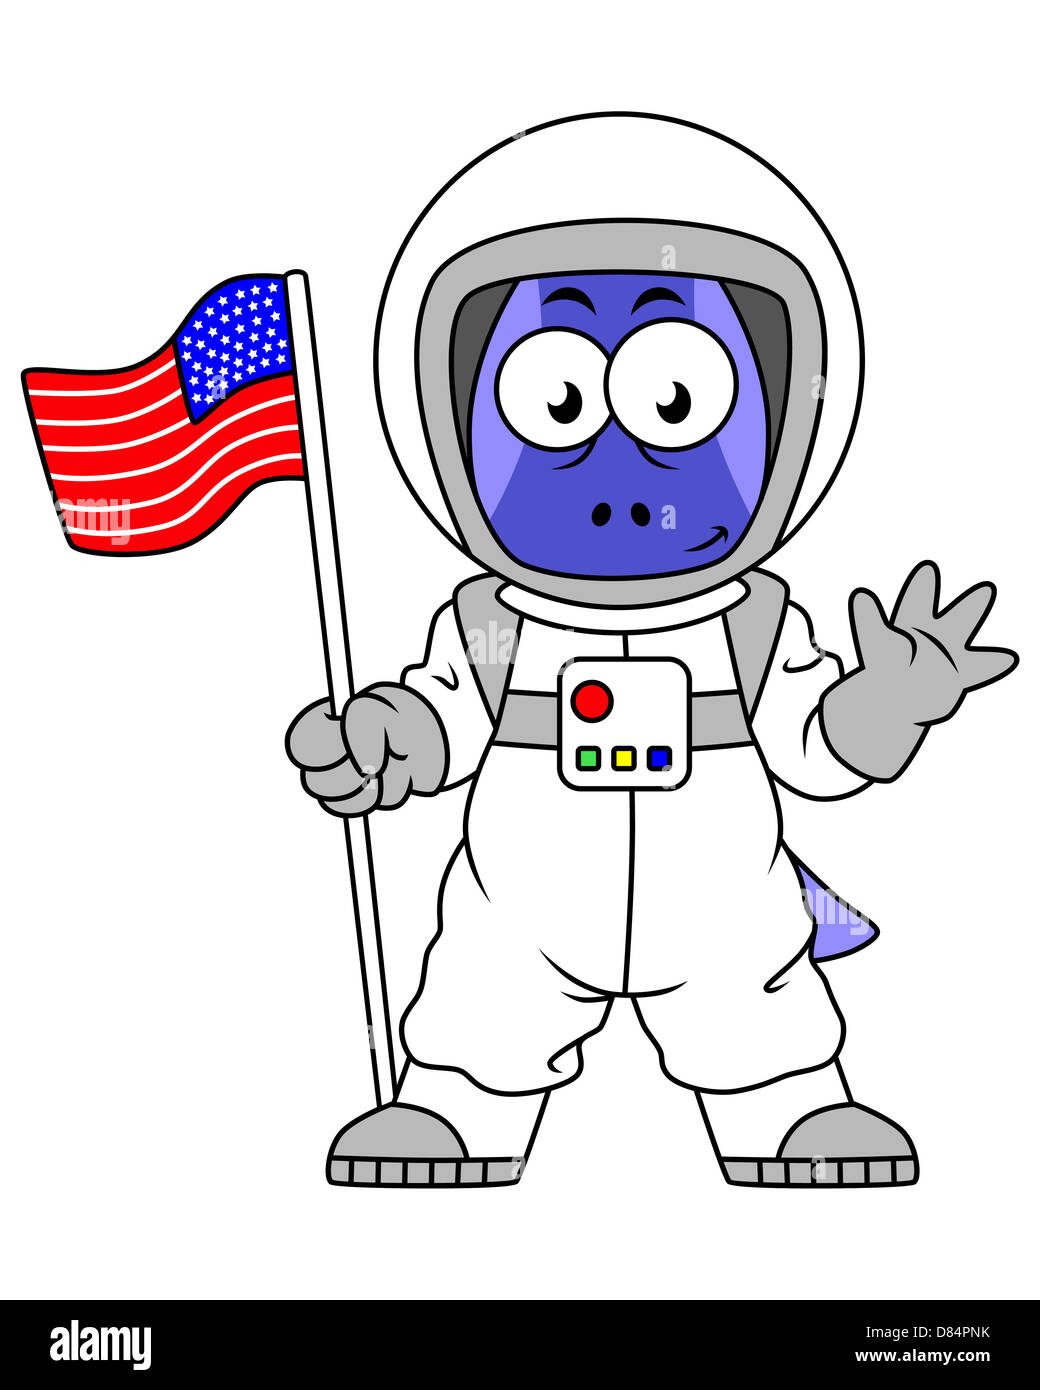 Illustration of a Parasaurolophus astronaut holding American Flag. Stock Photo